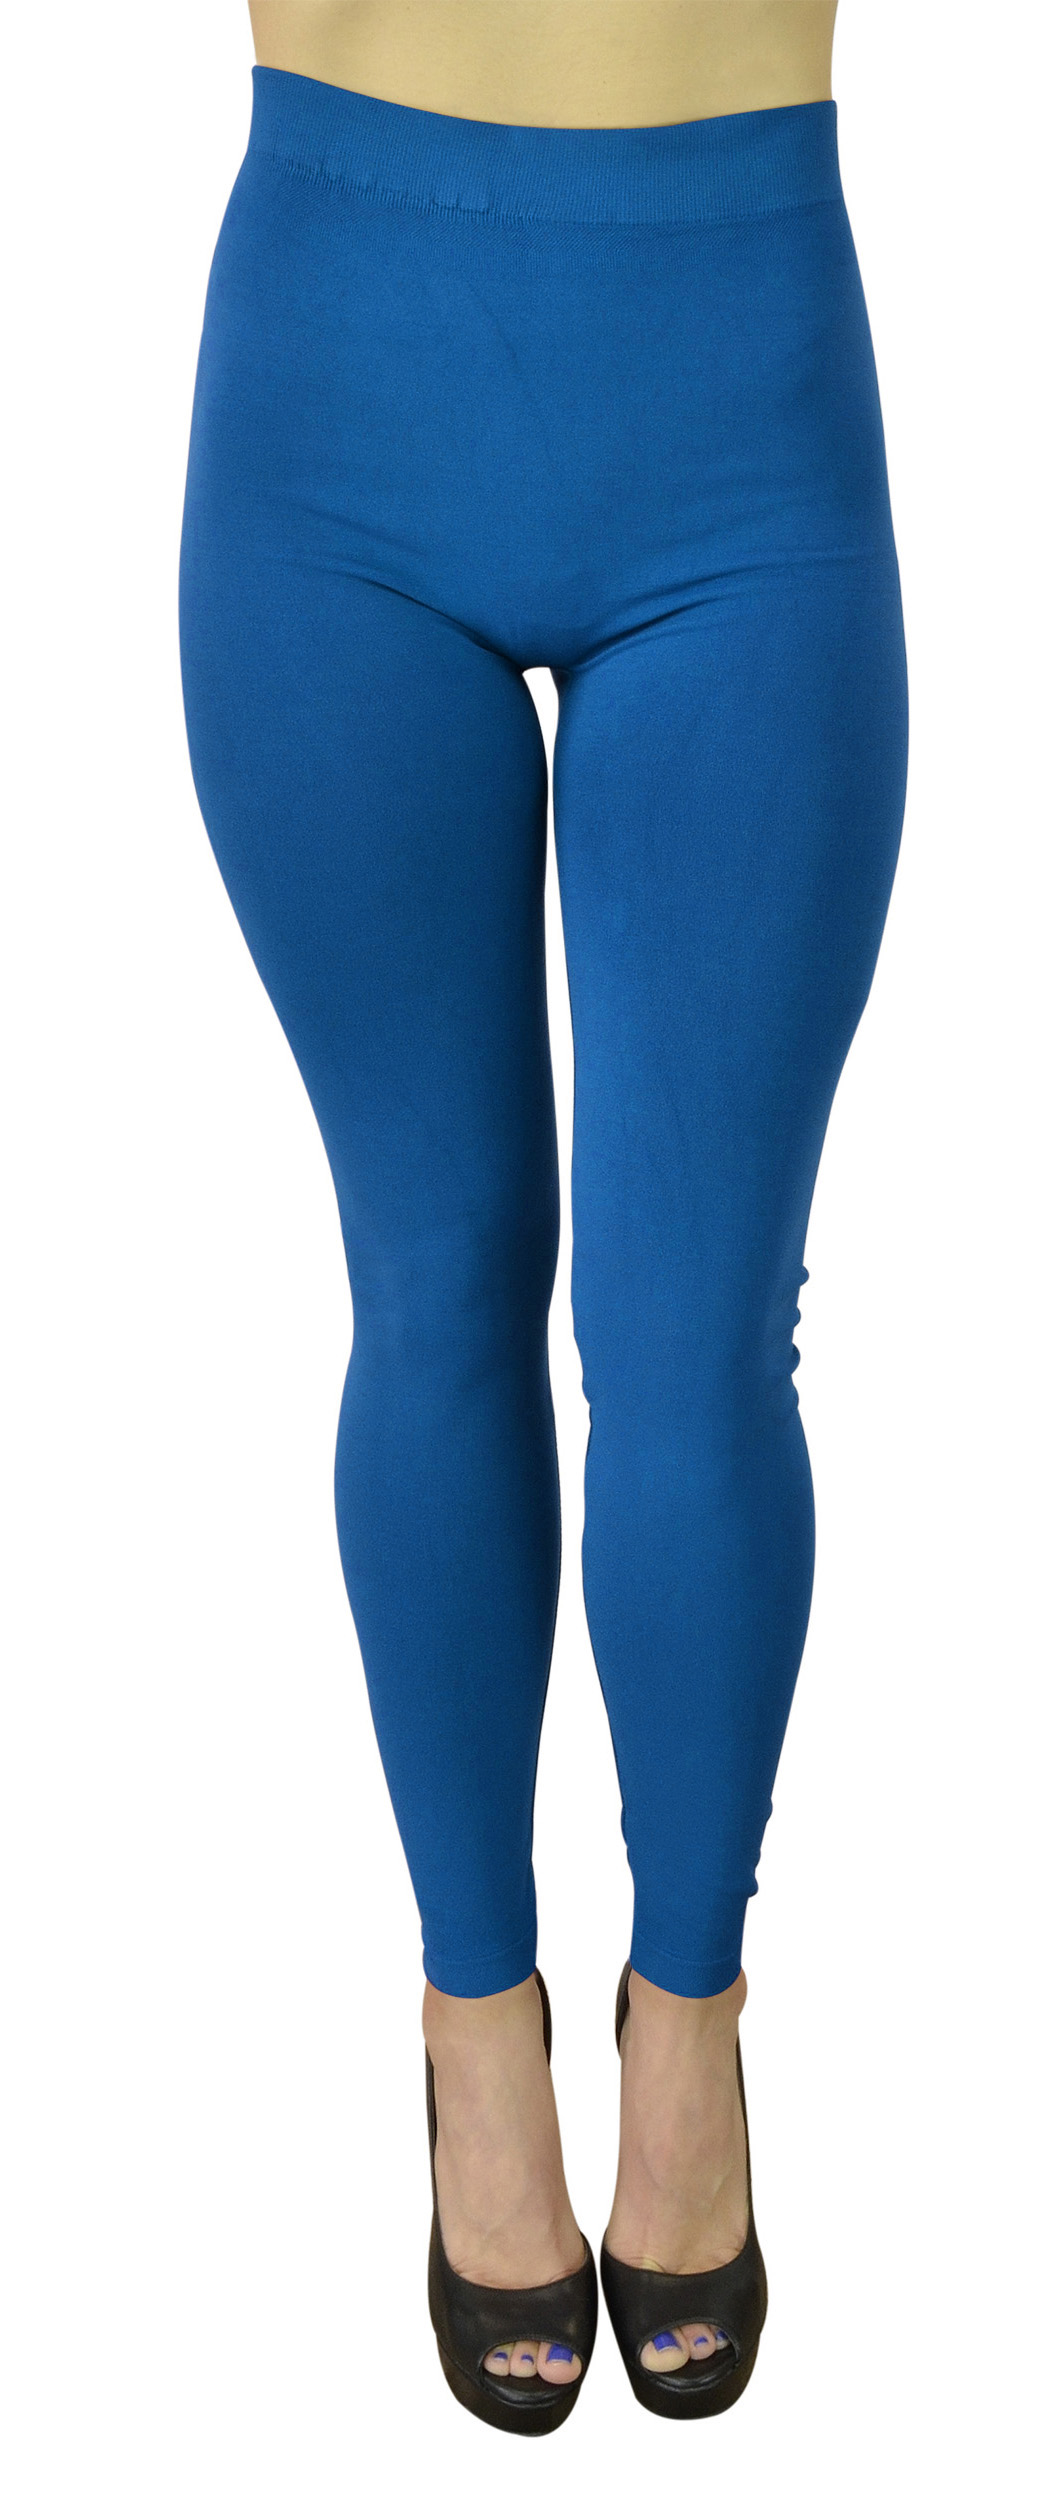 Belle Donne High Waist Leggings Tights for Women Fashion Gym Yoga Casual Trendy Colors - LightBlue-5 in-Waistband